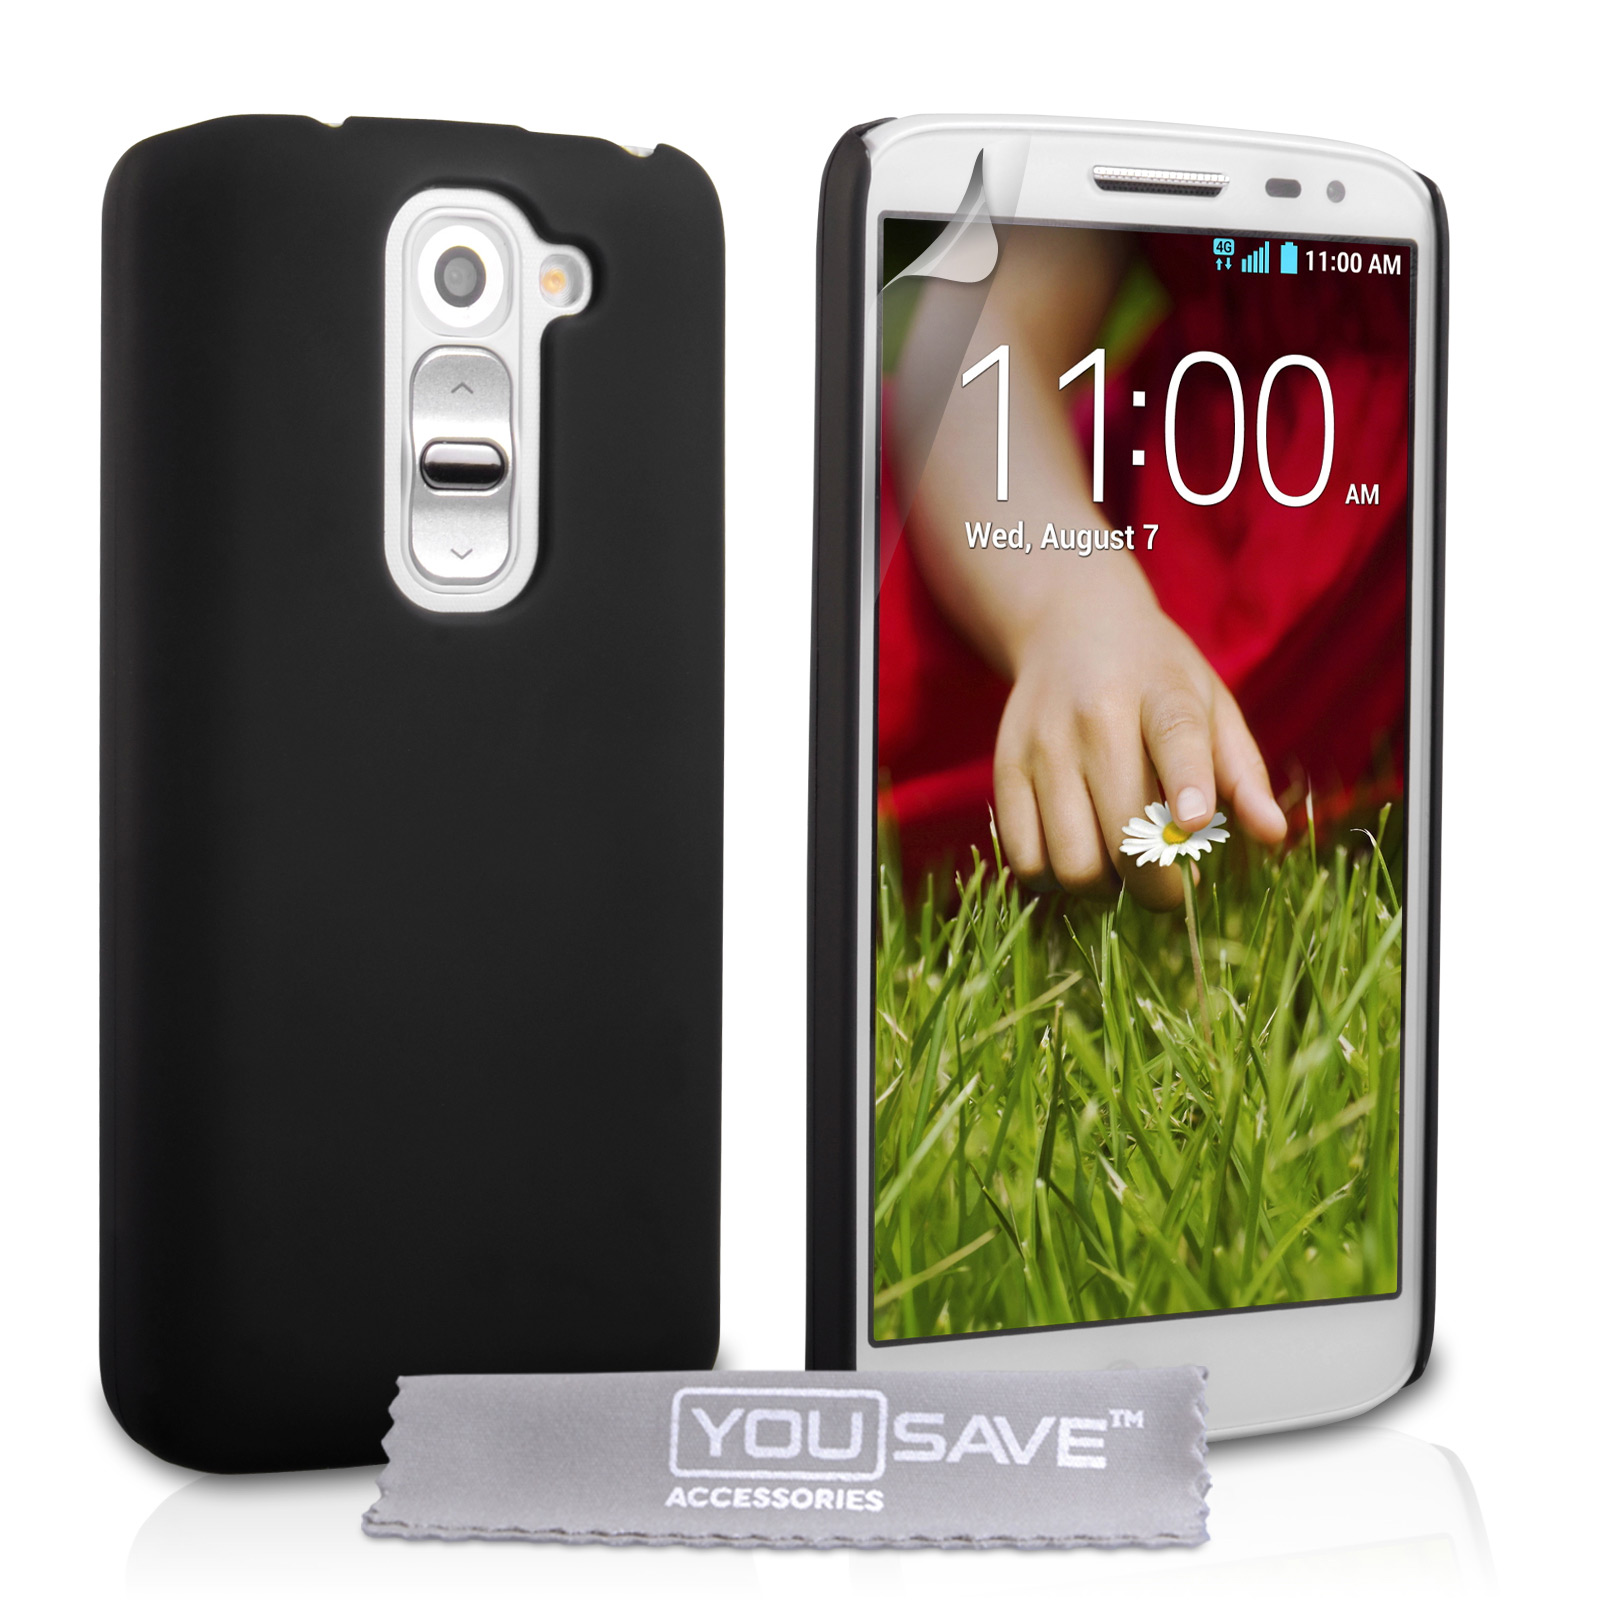 YouSave Accessories LG G2 Mini Hard Hybrid Case - Black